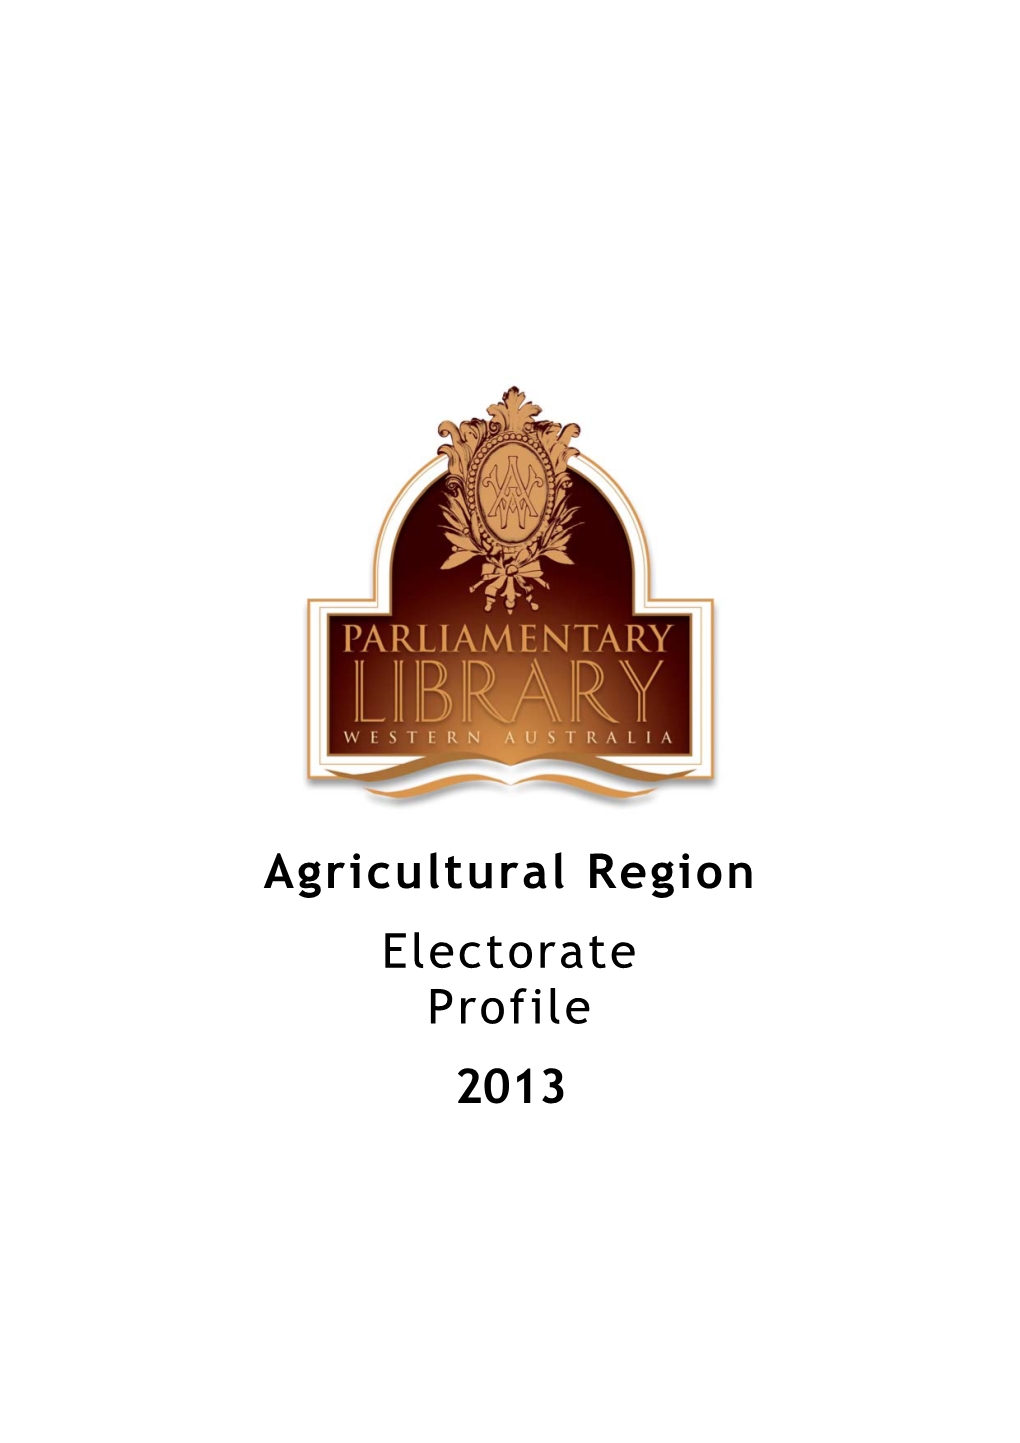 Agricultural Region Electorate Profile